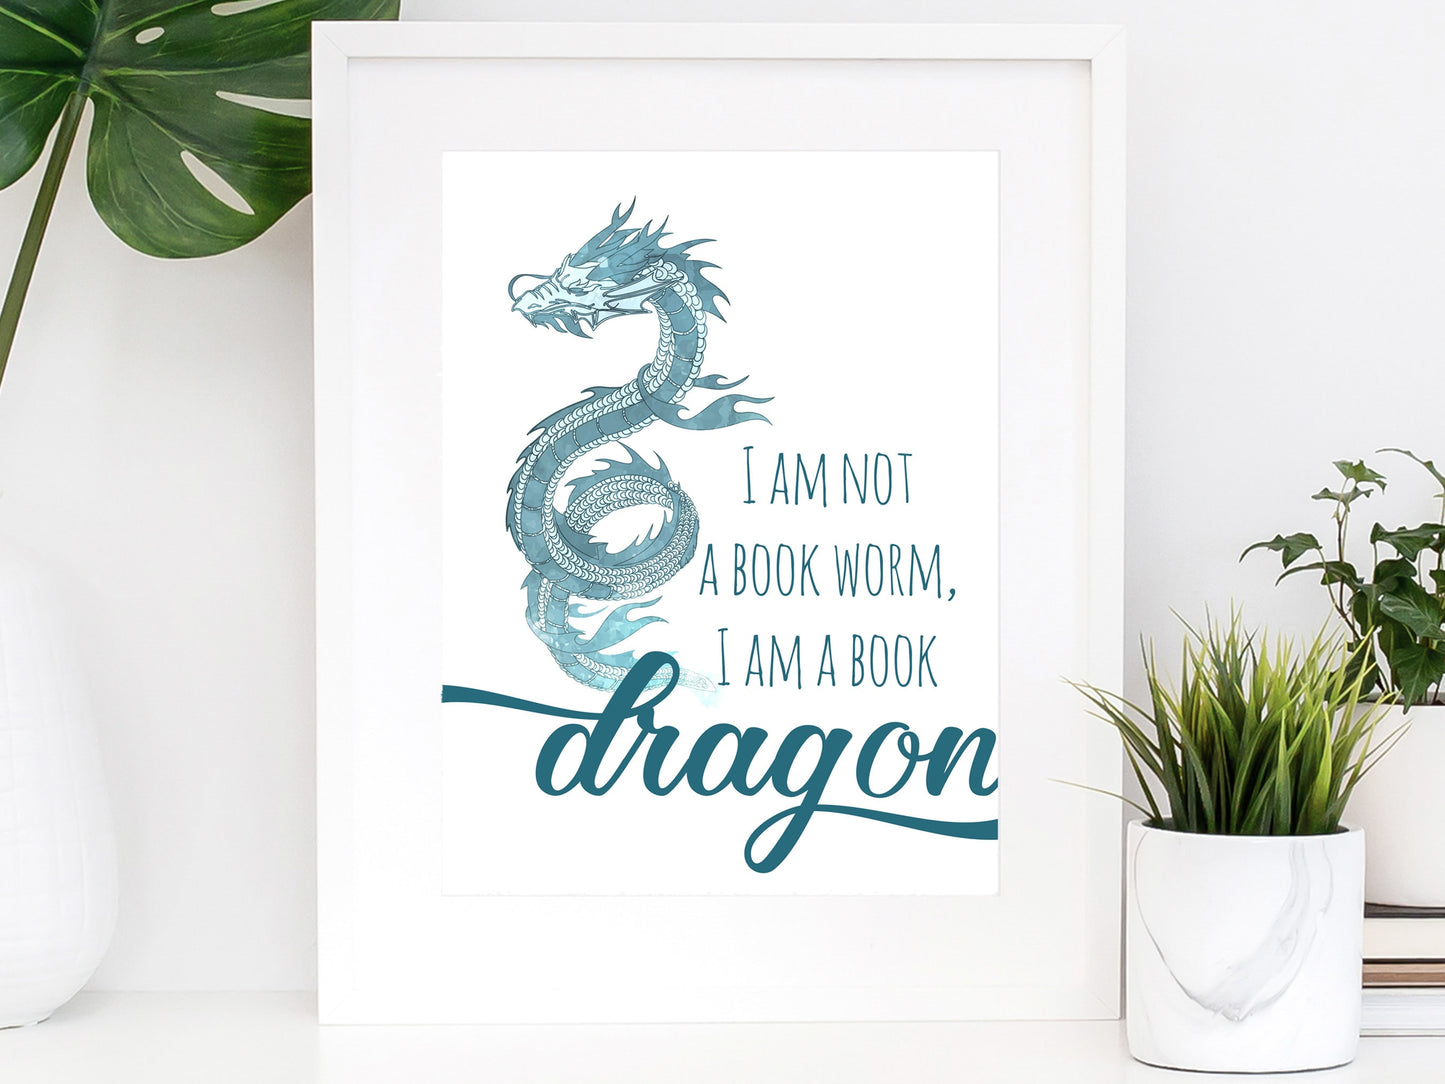 Printable I am Not a Book Worm, I am a Book Dragon! Printable Art Print